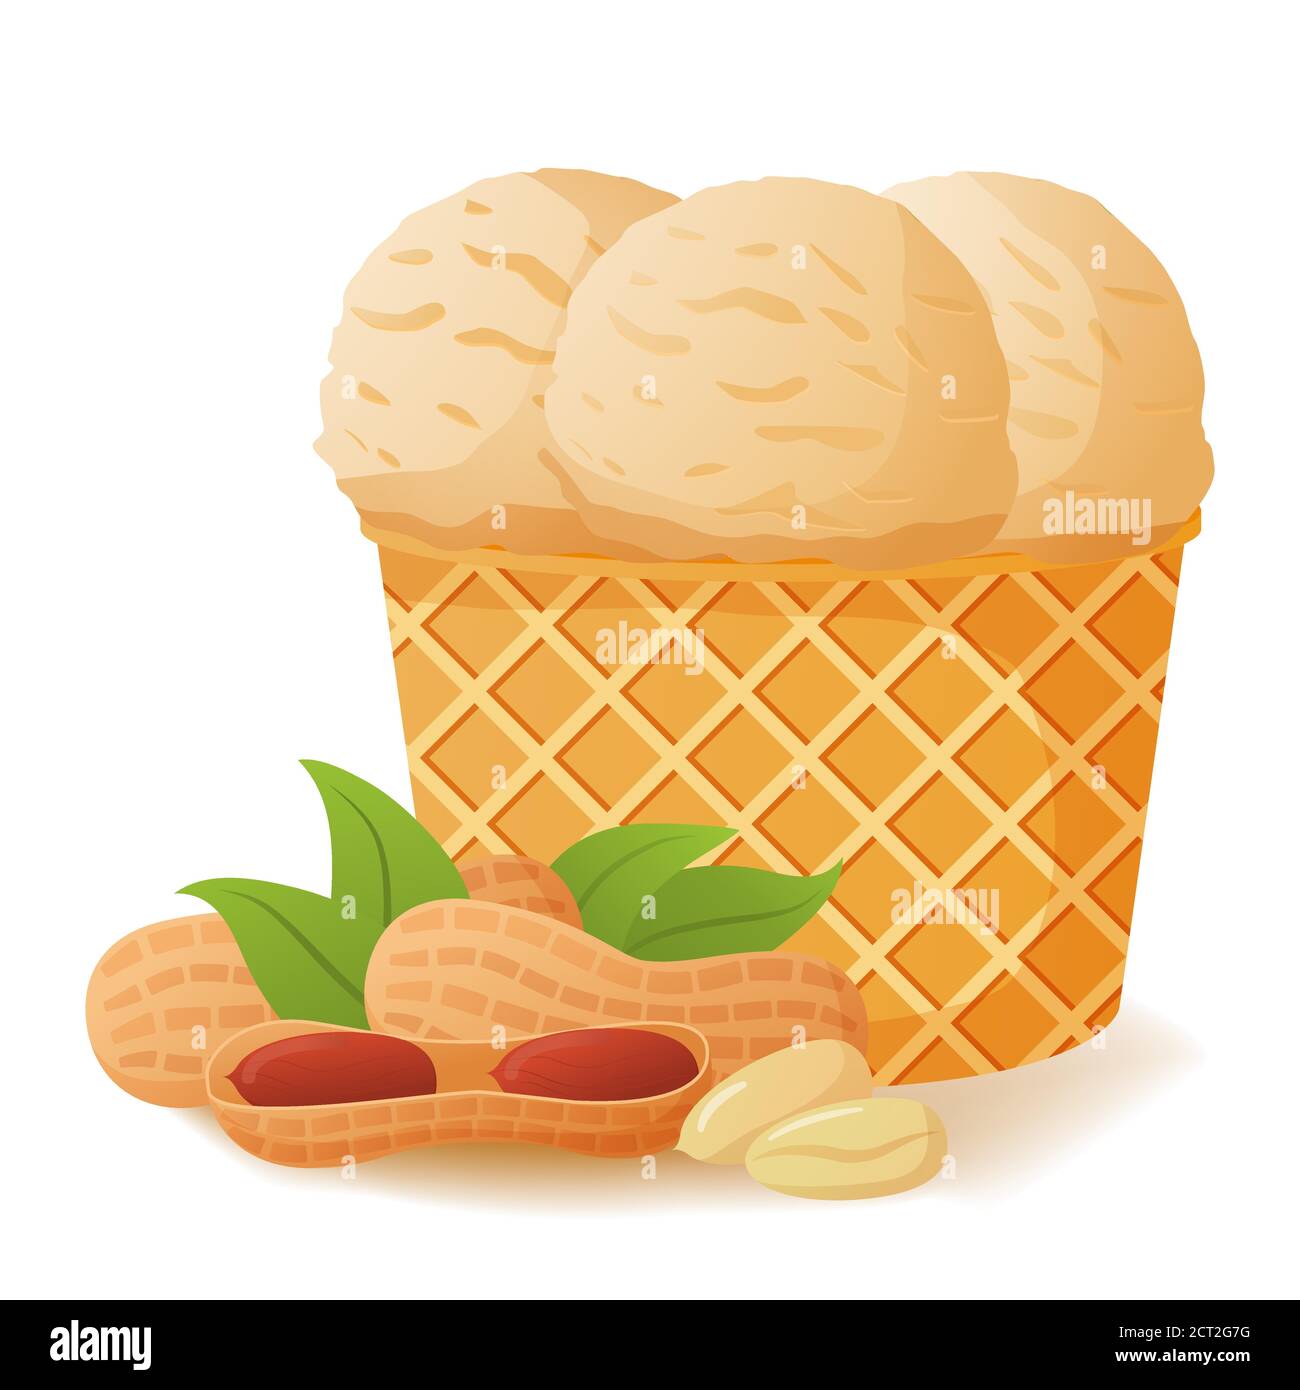 Nut ice cream peanut in waffle cones. Realistic illustration vector. Stock Vector